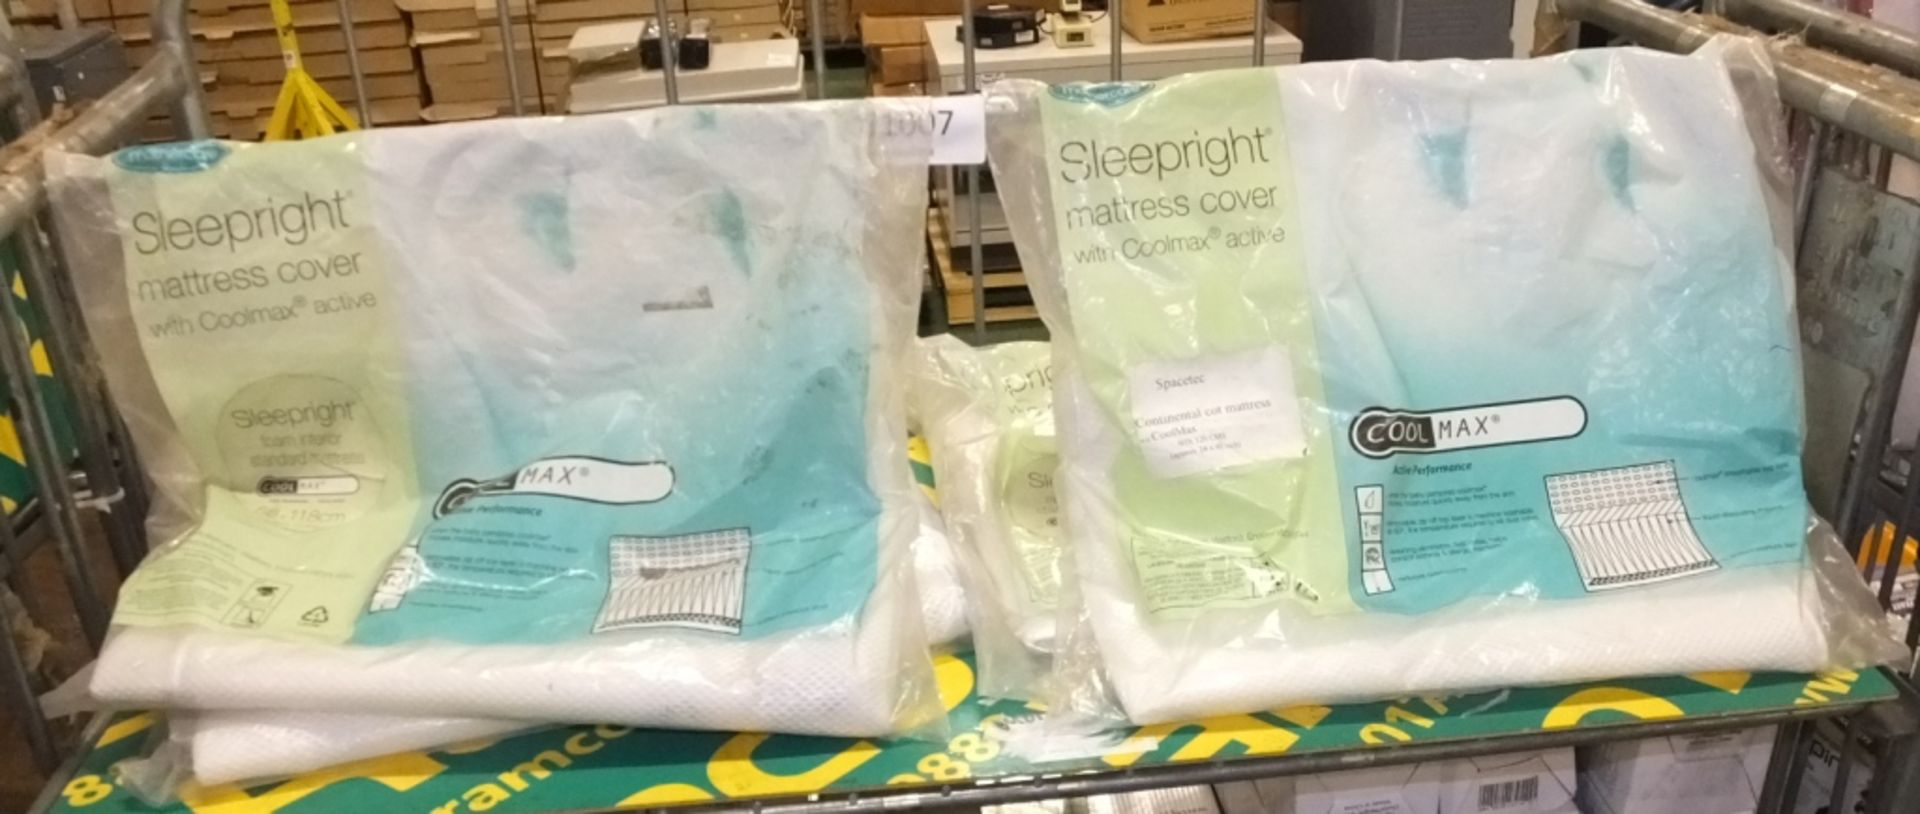 2x Mothercare Sleepright mattress covers